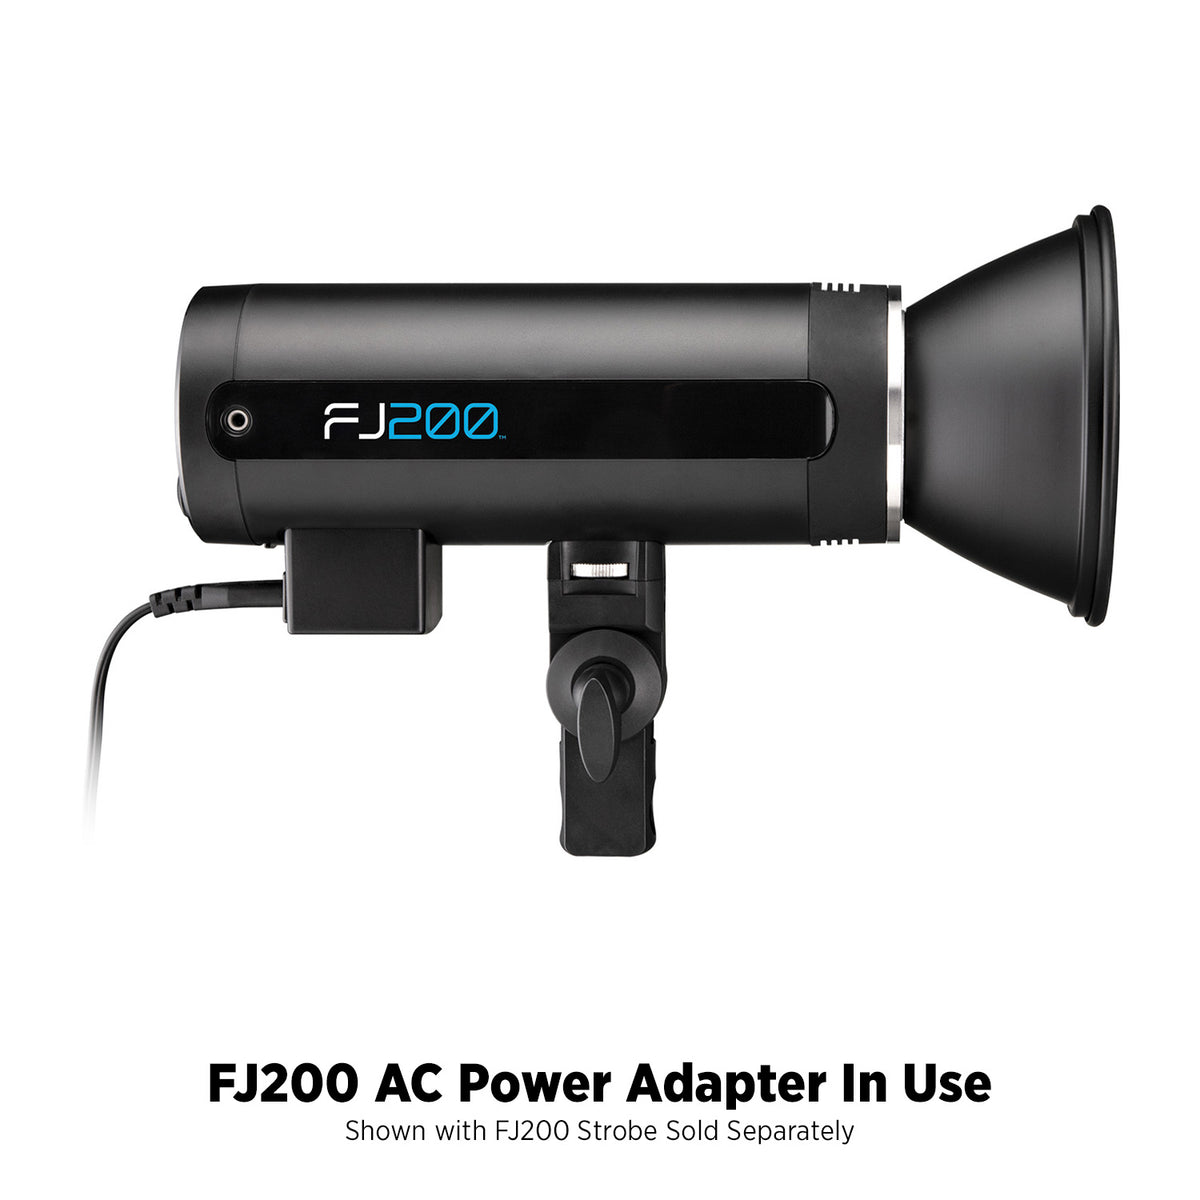 FJ200 AC Power Adapter